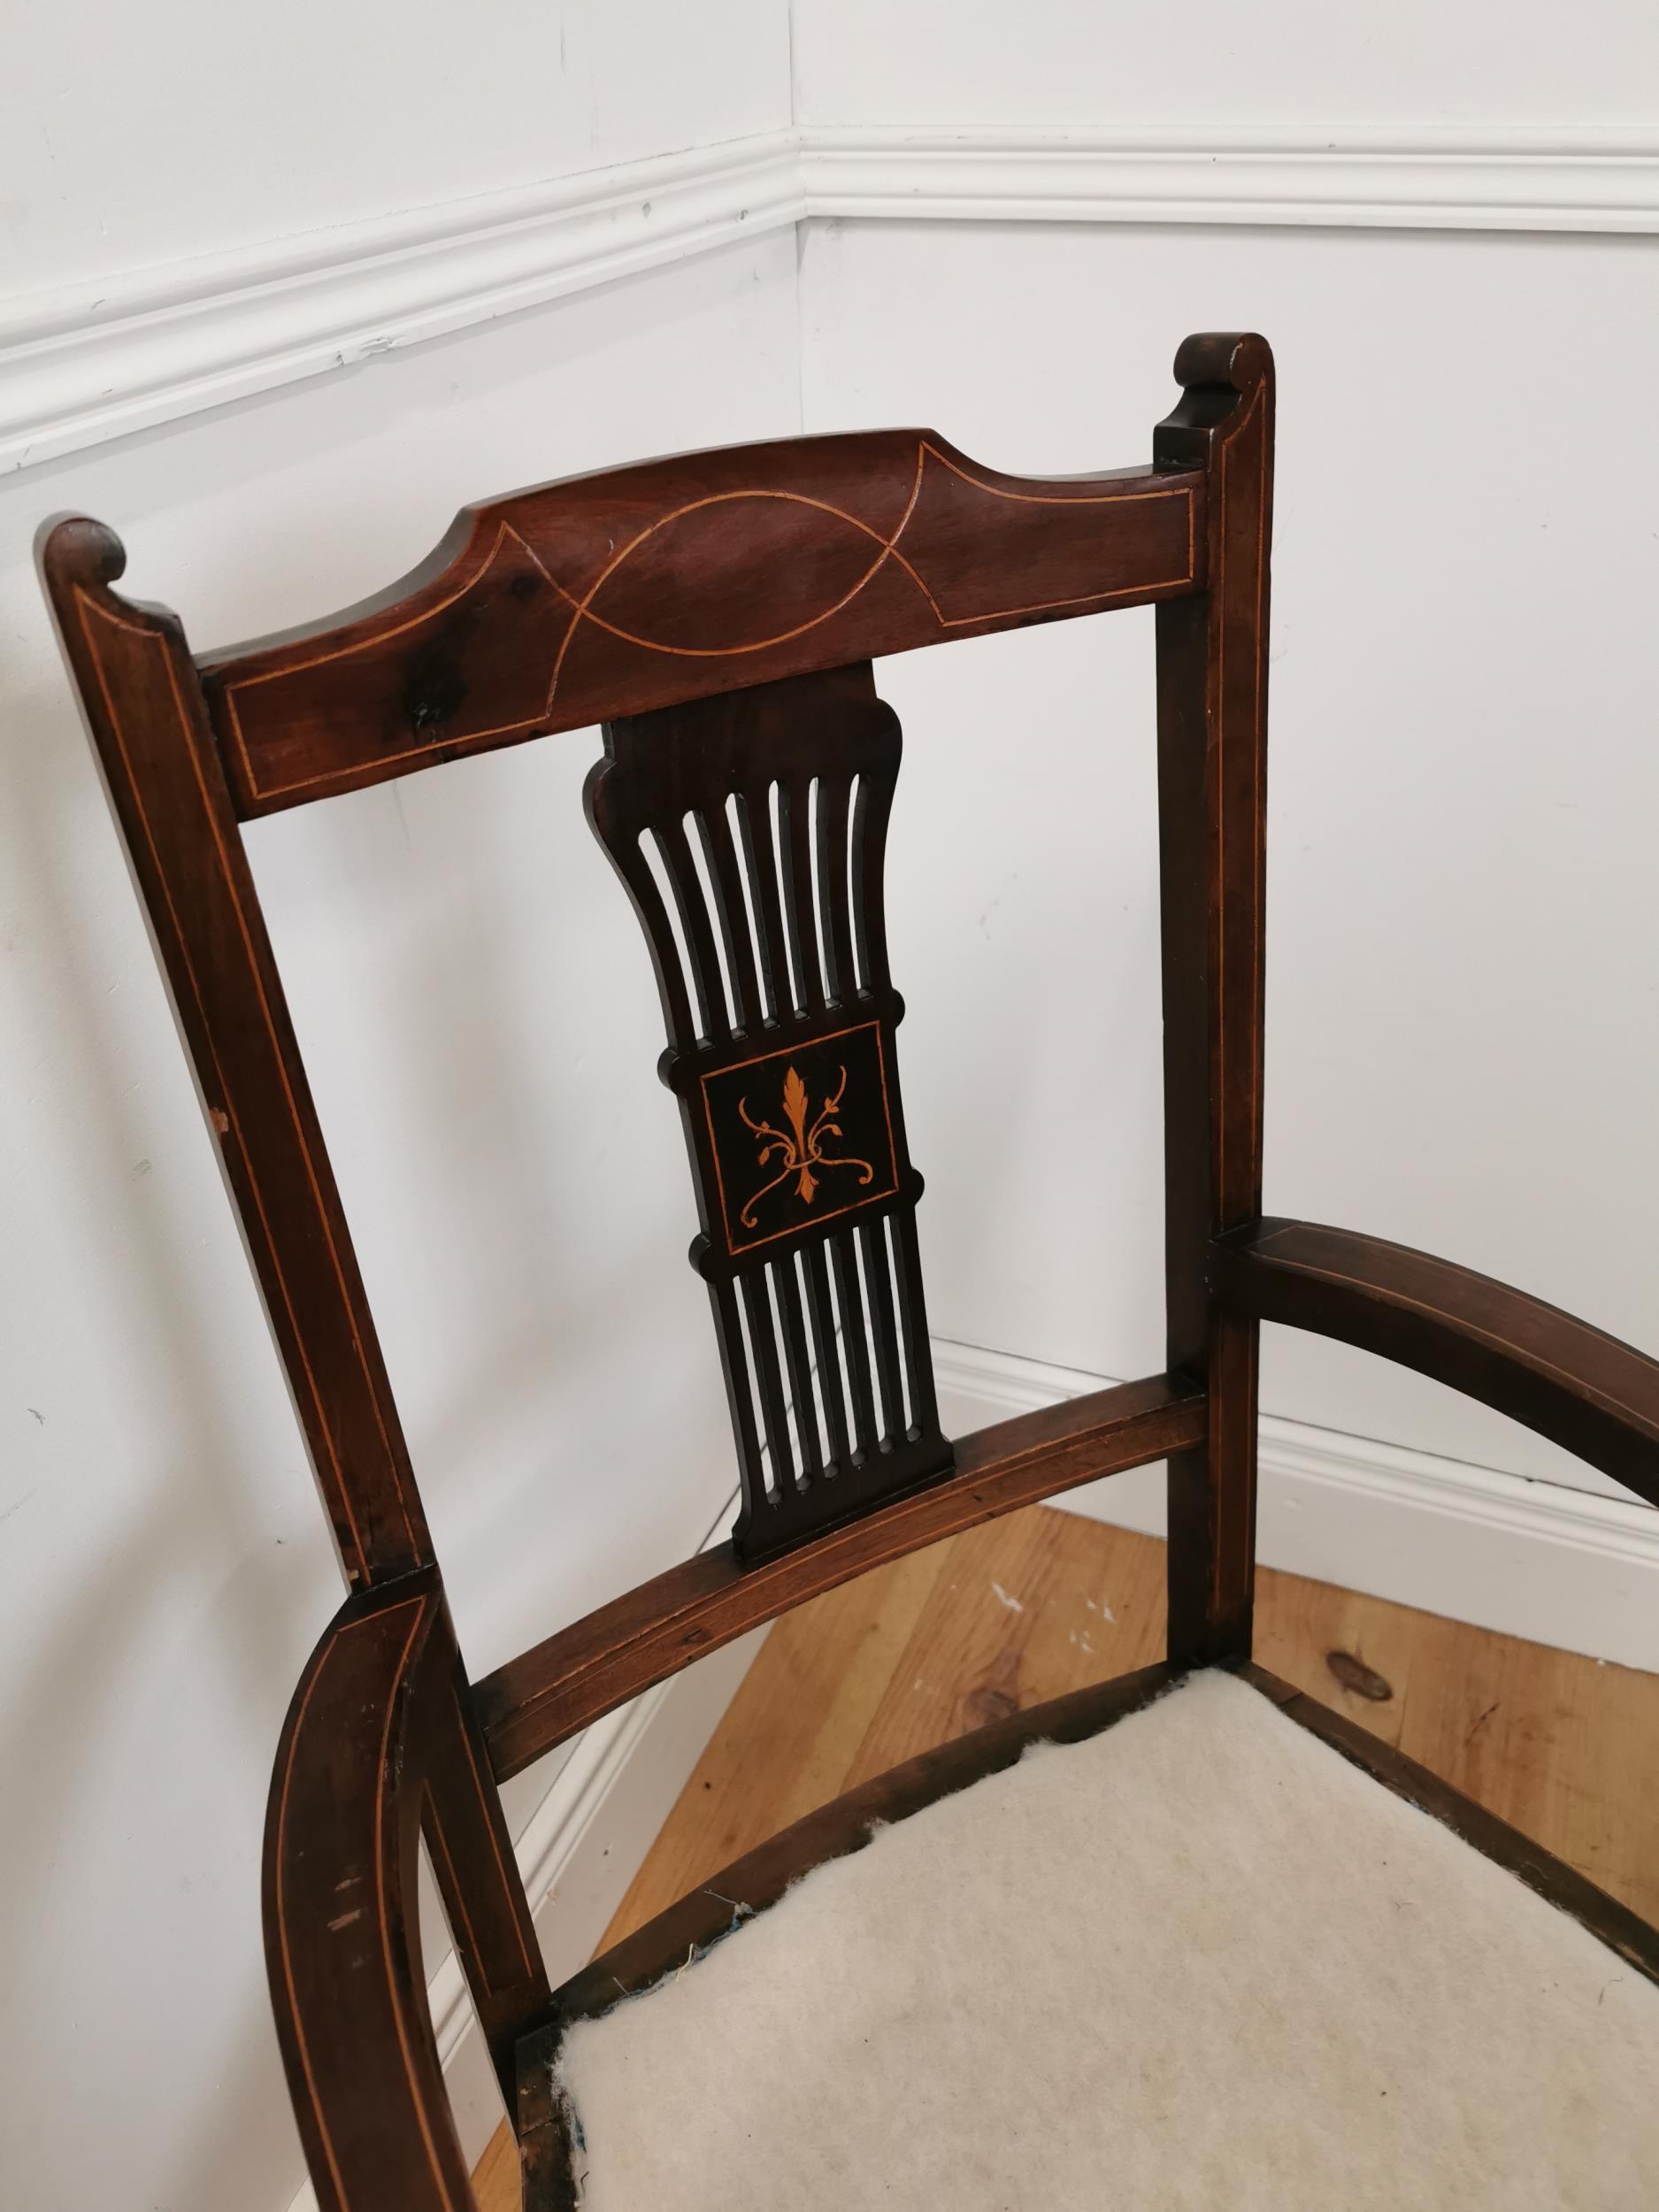 Edwardian inlaid mahogany open armchair raised on cabriole legs { 100cm H X 60cm W X 50cm D }. - Image 2 of 3